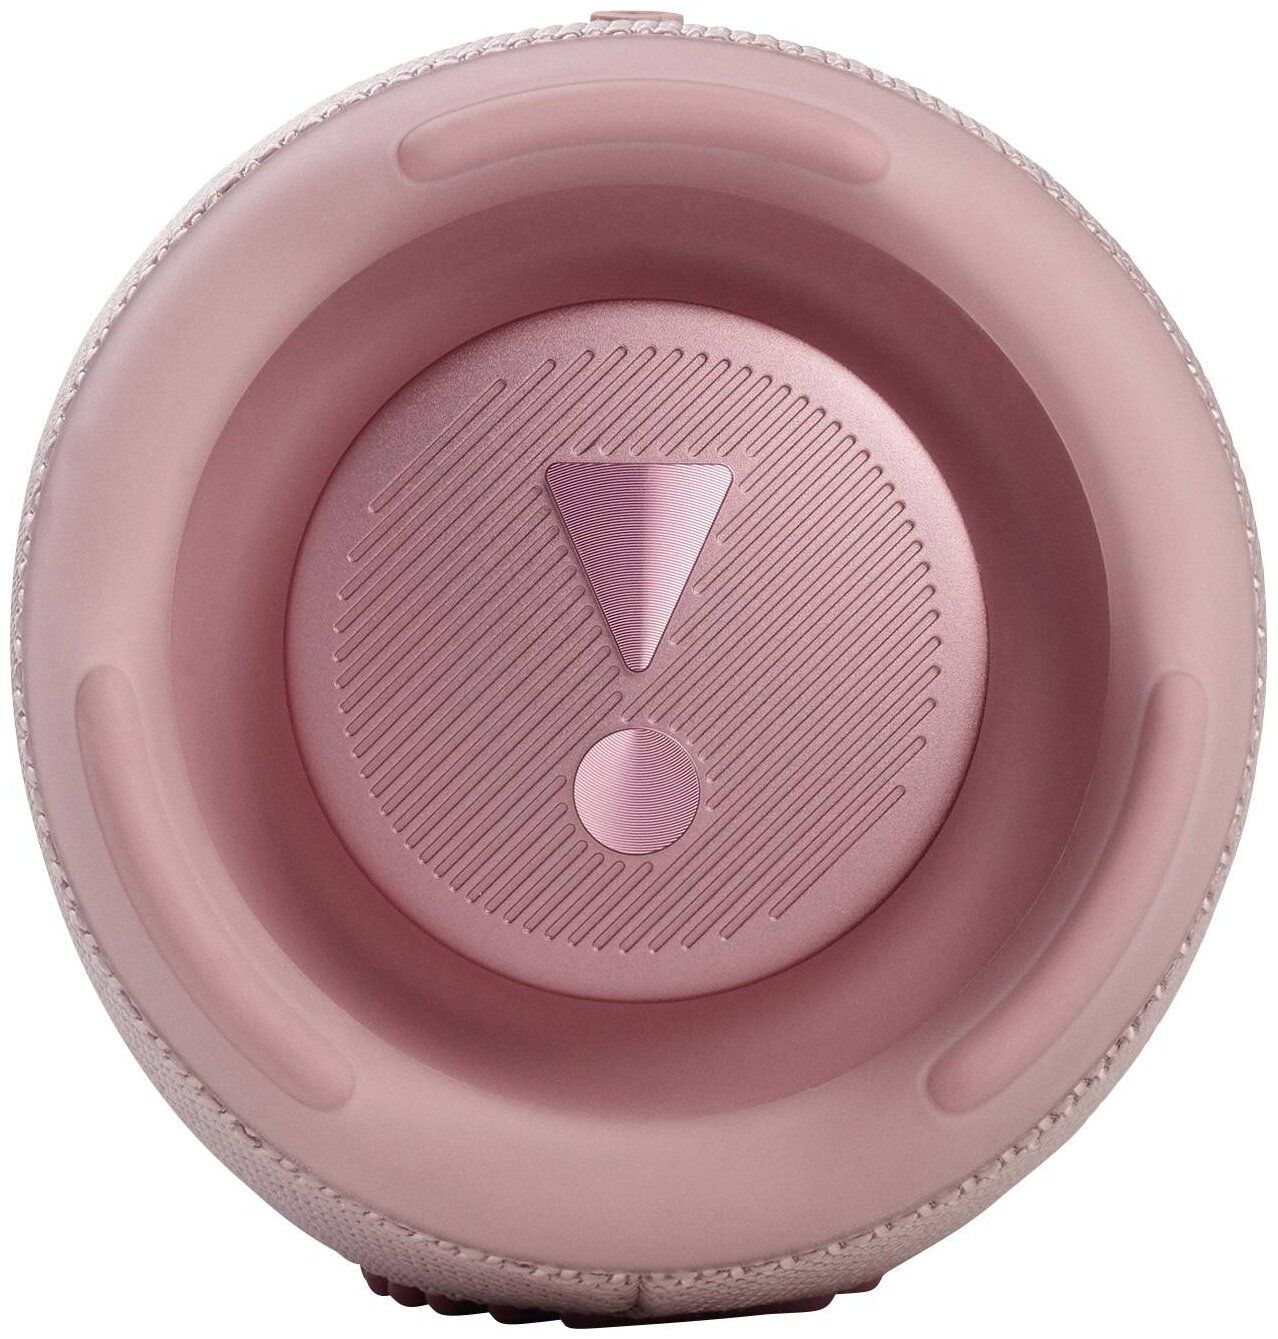 Портативная колонка JBL Charge 5 розовый